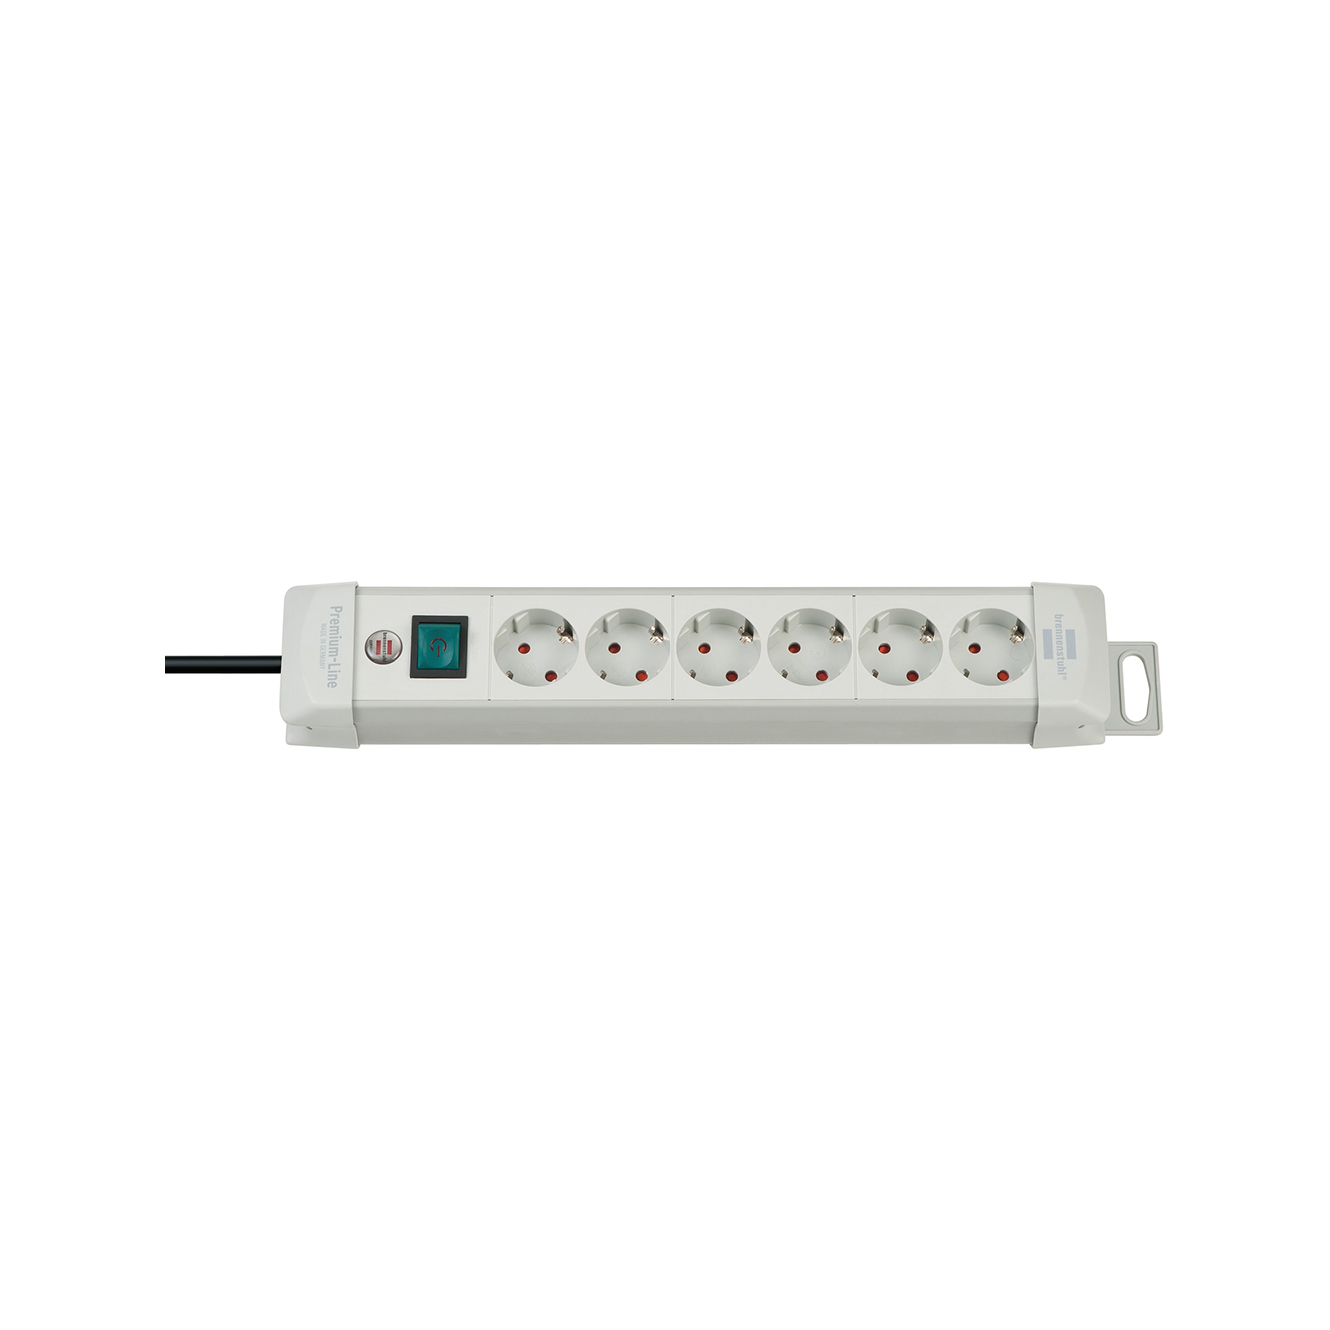 Удлинитель Brennenstuhl Premium-Line 6 розеток кабель 3 м H05VV-F 3G1,5 белый 1955560100